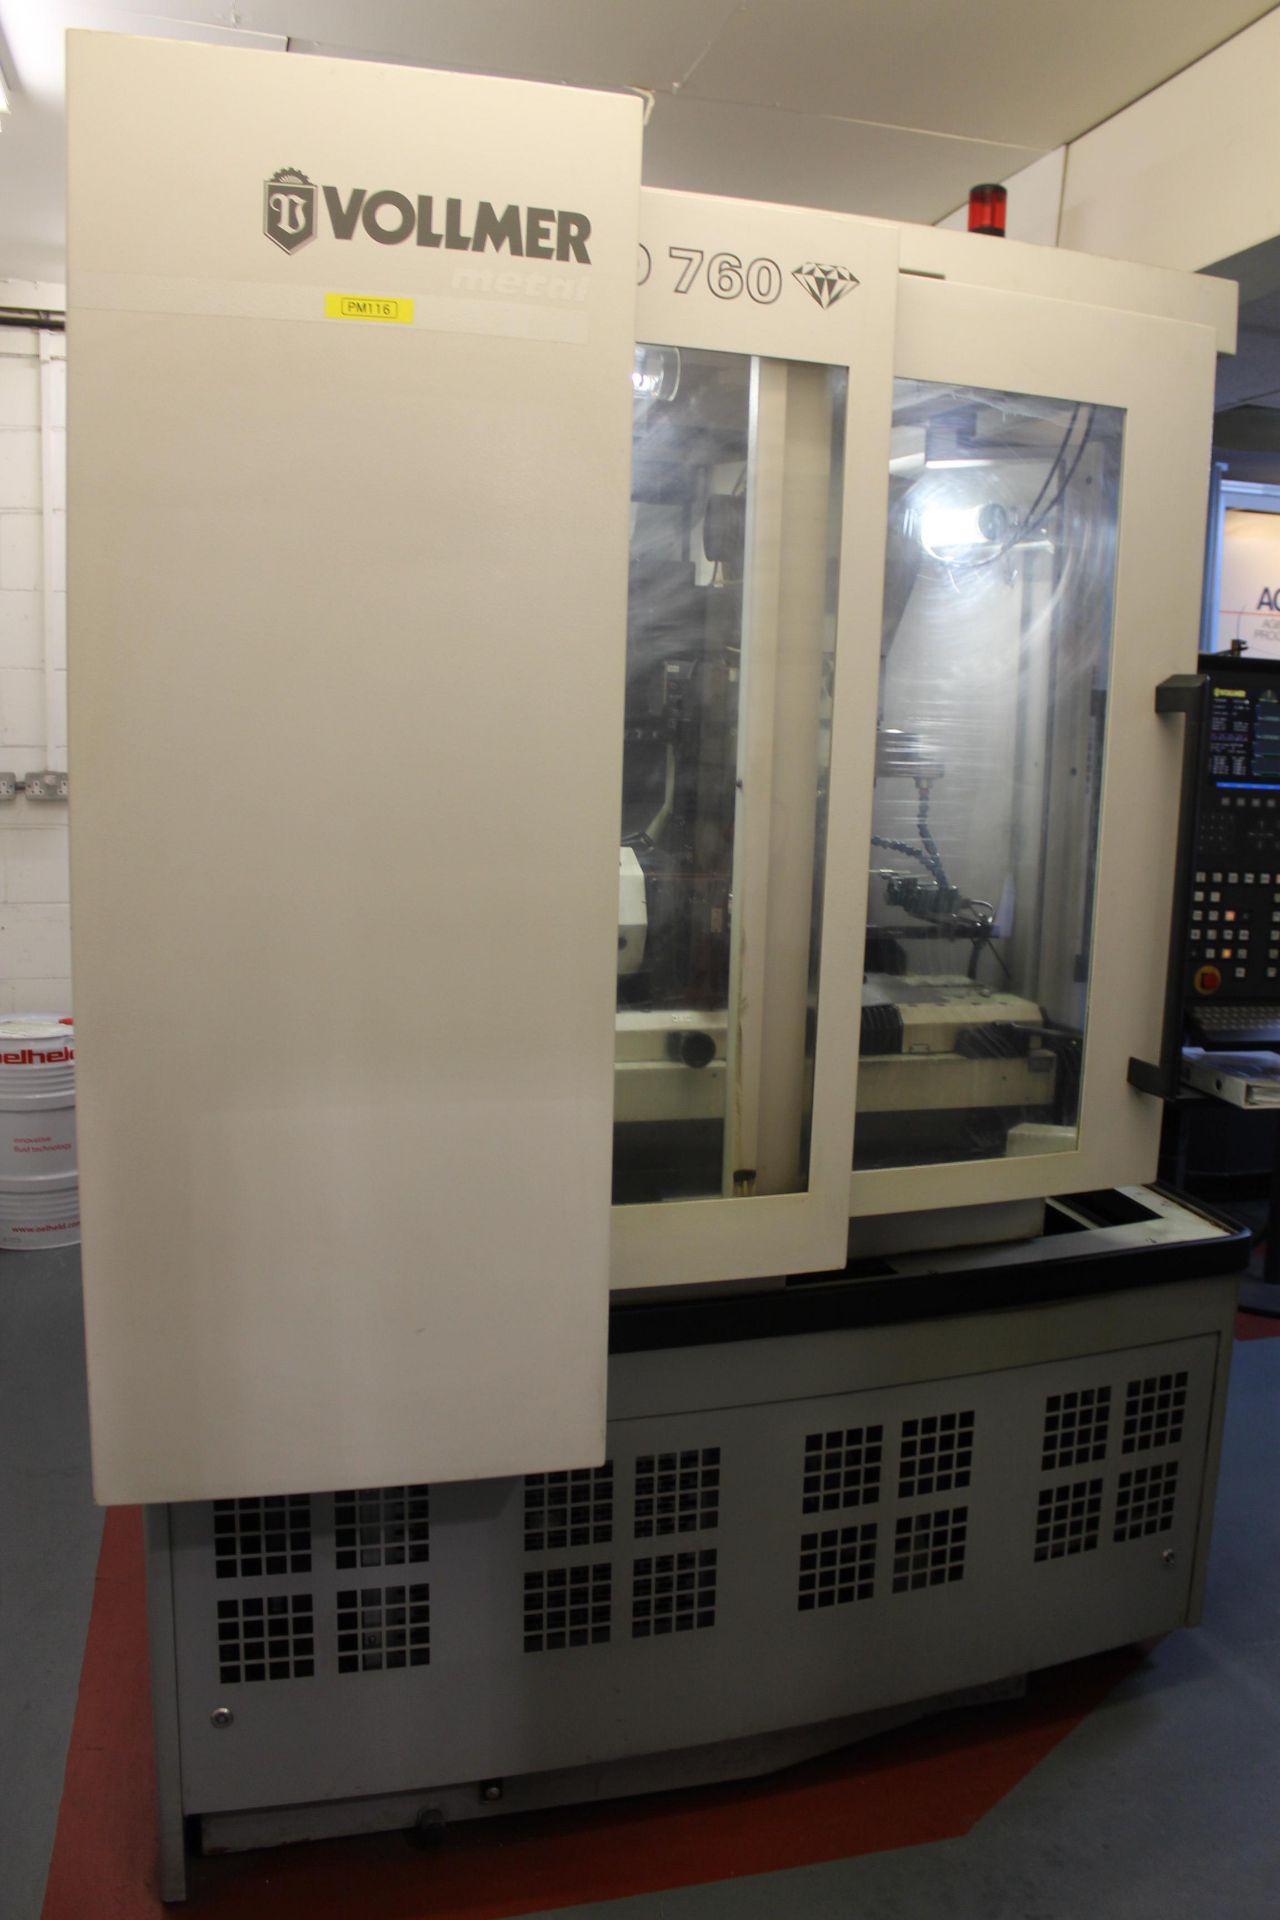 Vollmer QWD 760 5 axis horizontal wire cut EDM machine, Serial No. 109 (2001) weight: 4,600 kg,